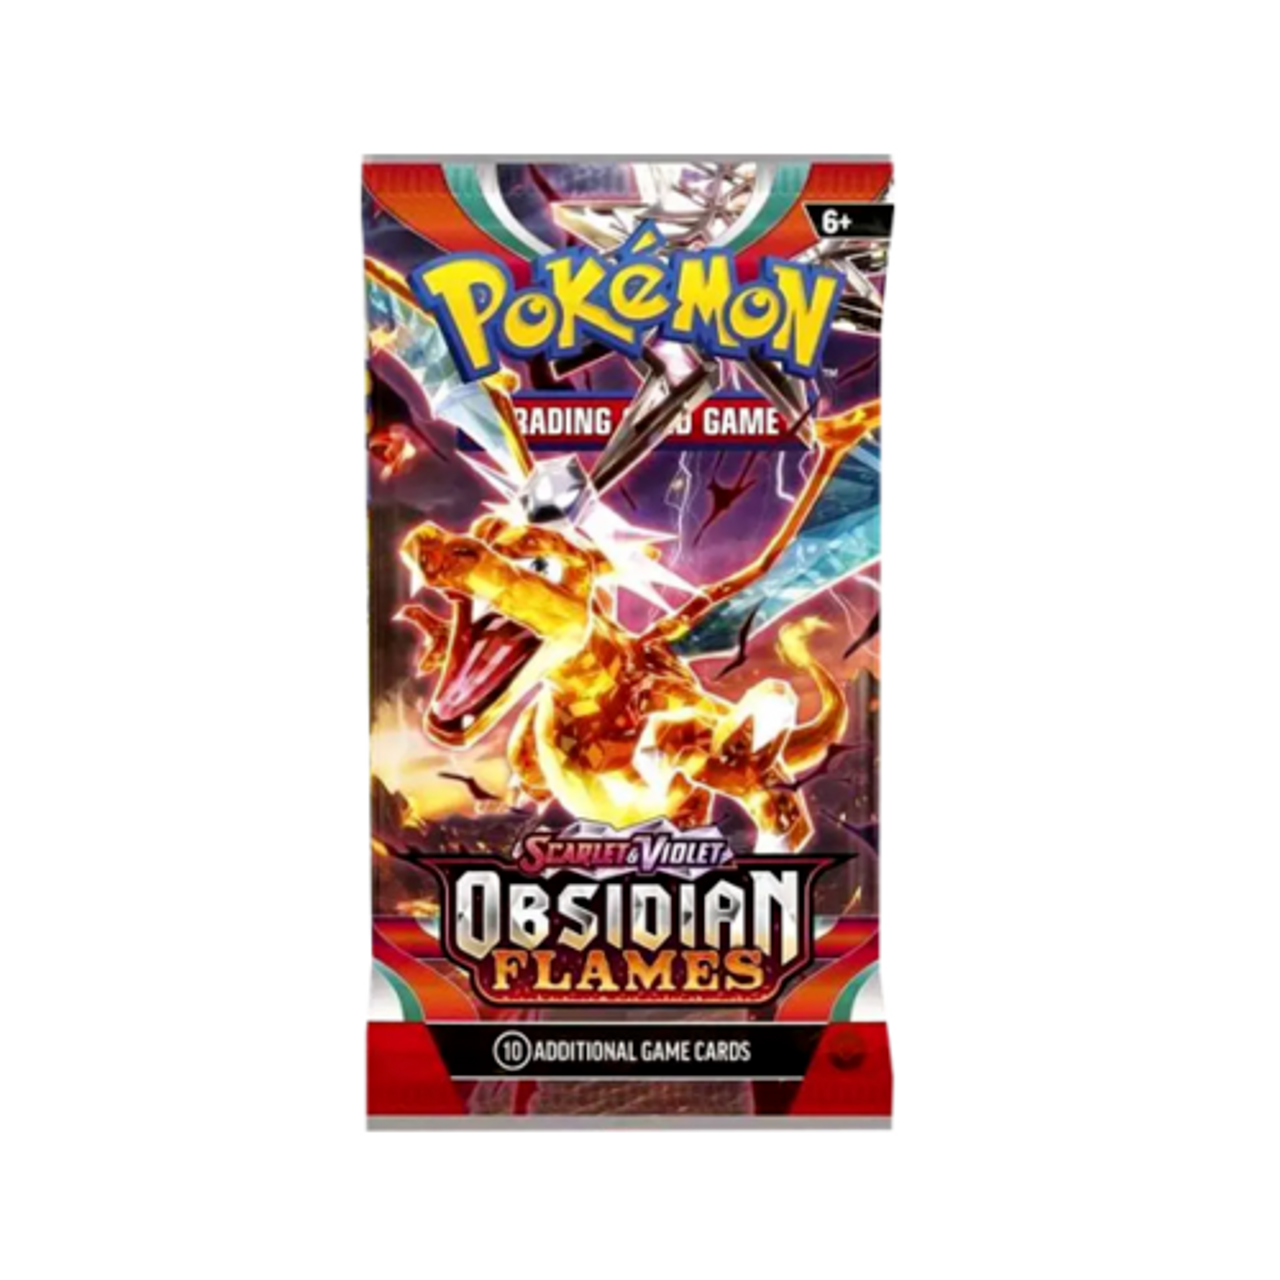 Pokémon TCG: Obsidian Flames, Pack